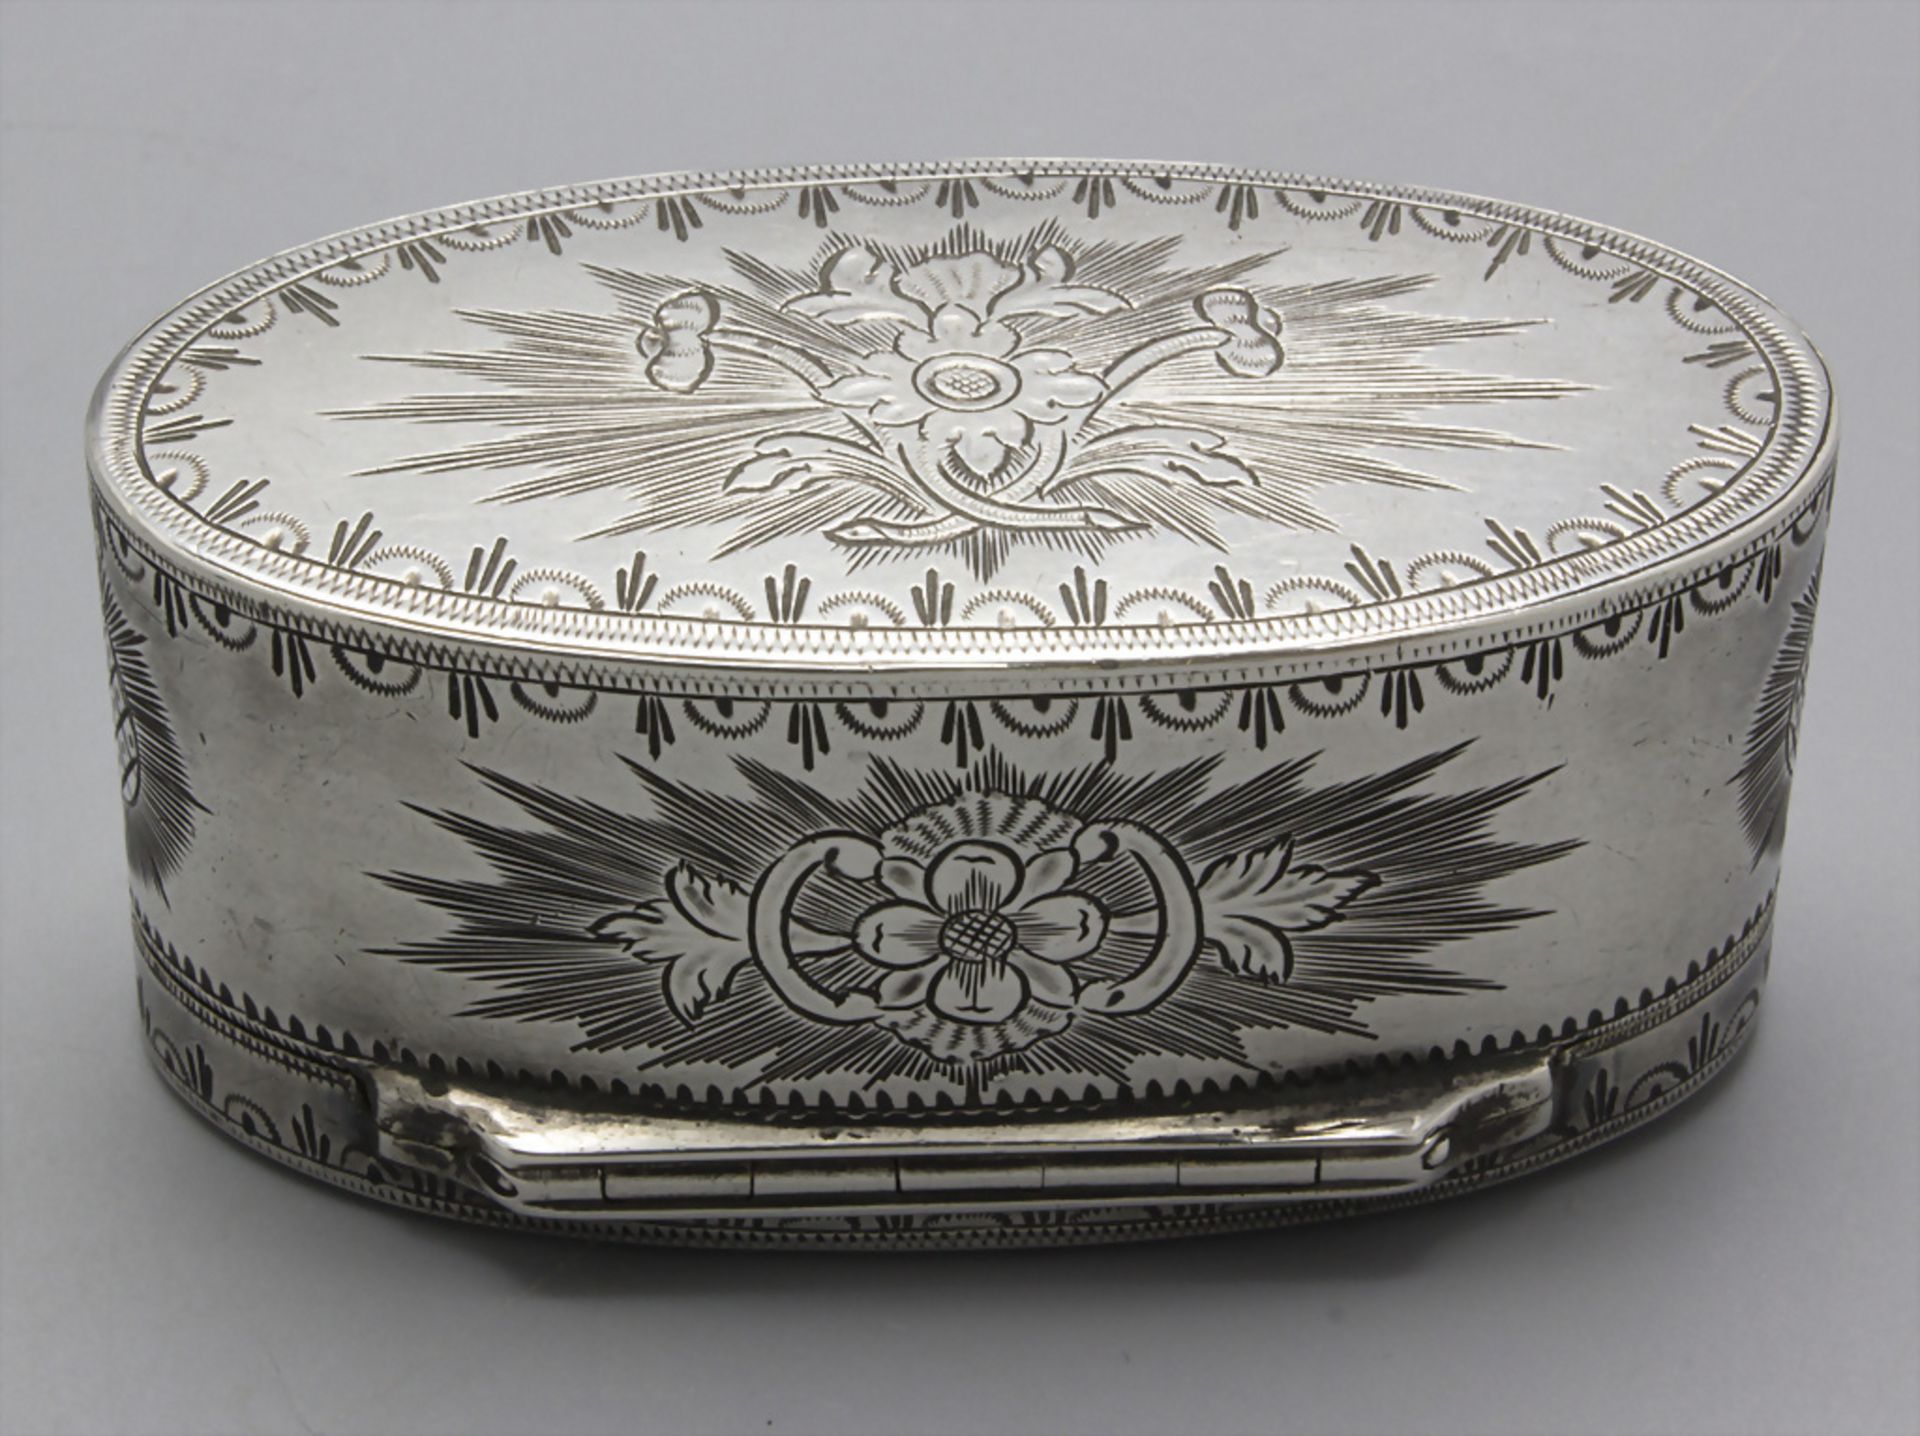 Tabatiere / Boite en argent massif / A silver snuff box, Ath, 1778 - Image 2 of 7